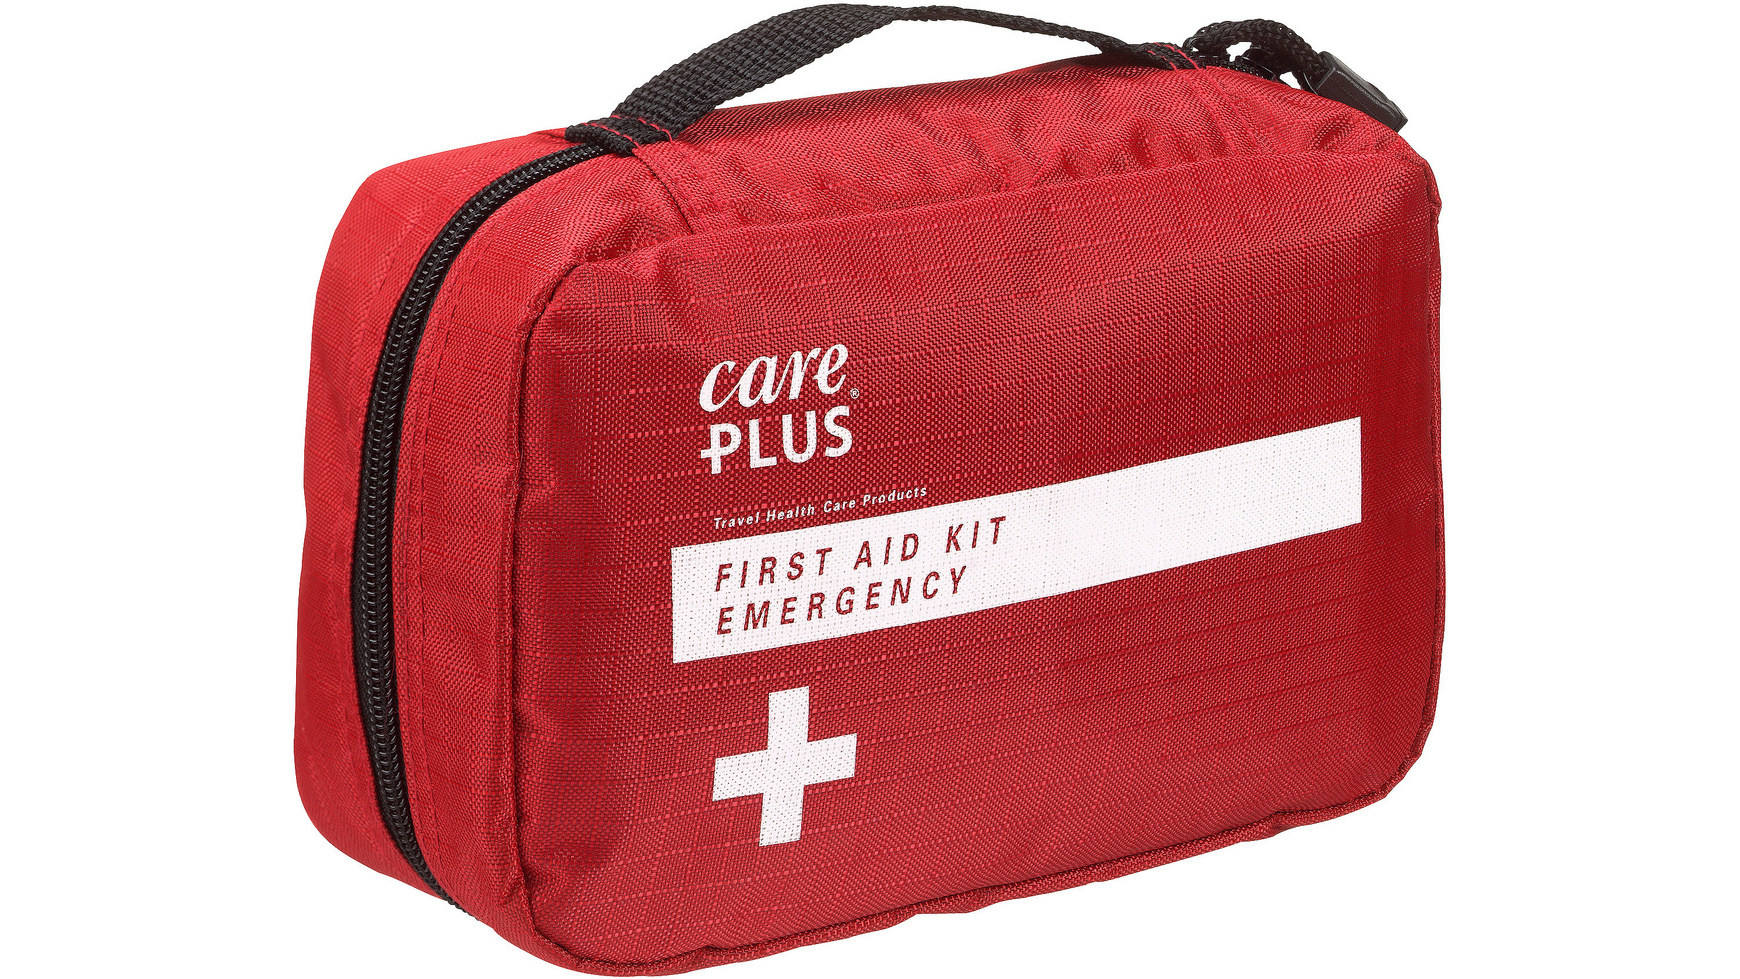 https://static.transa.ch/careplus-first-aid-kit-emergency-rot/pdzoom/1232610.jpg